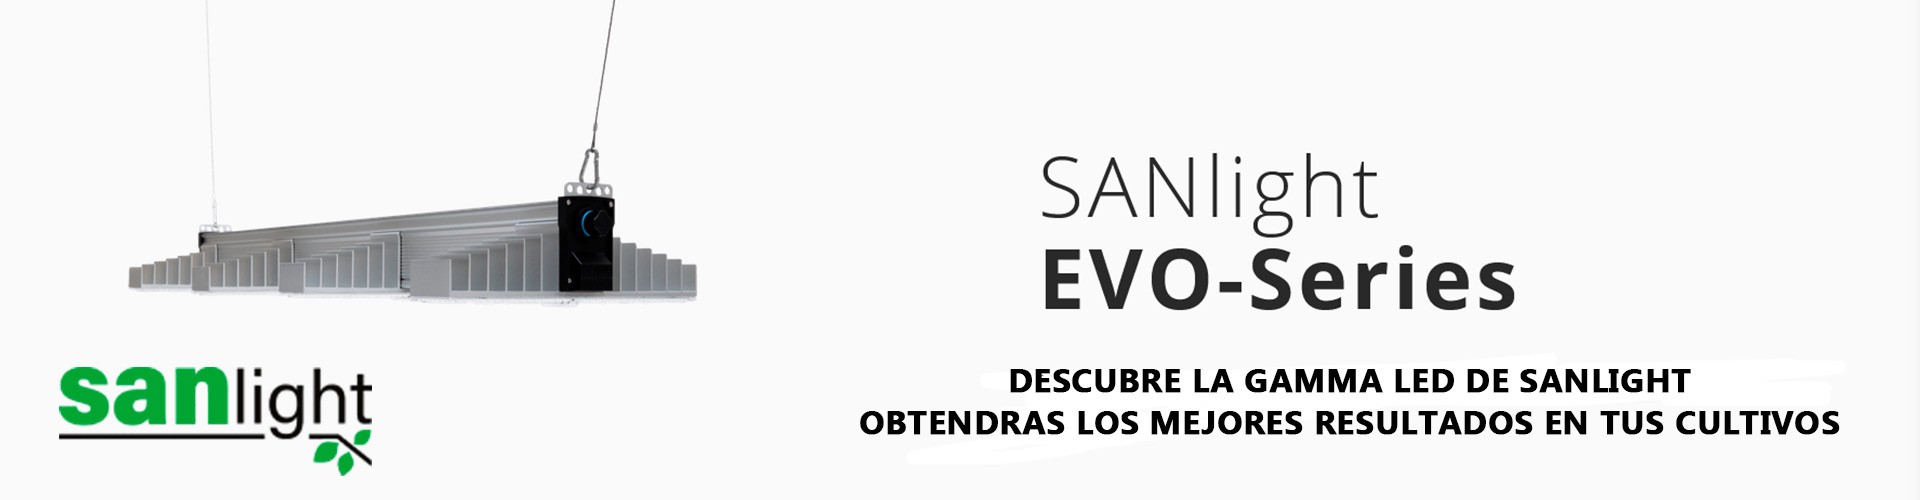 Sanlight Evo-series